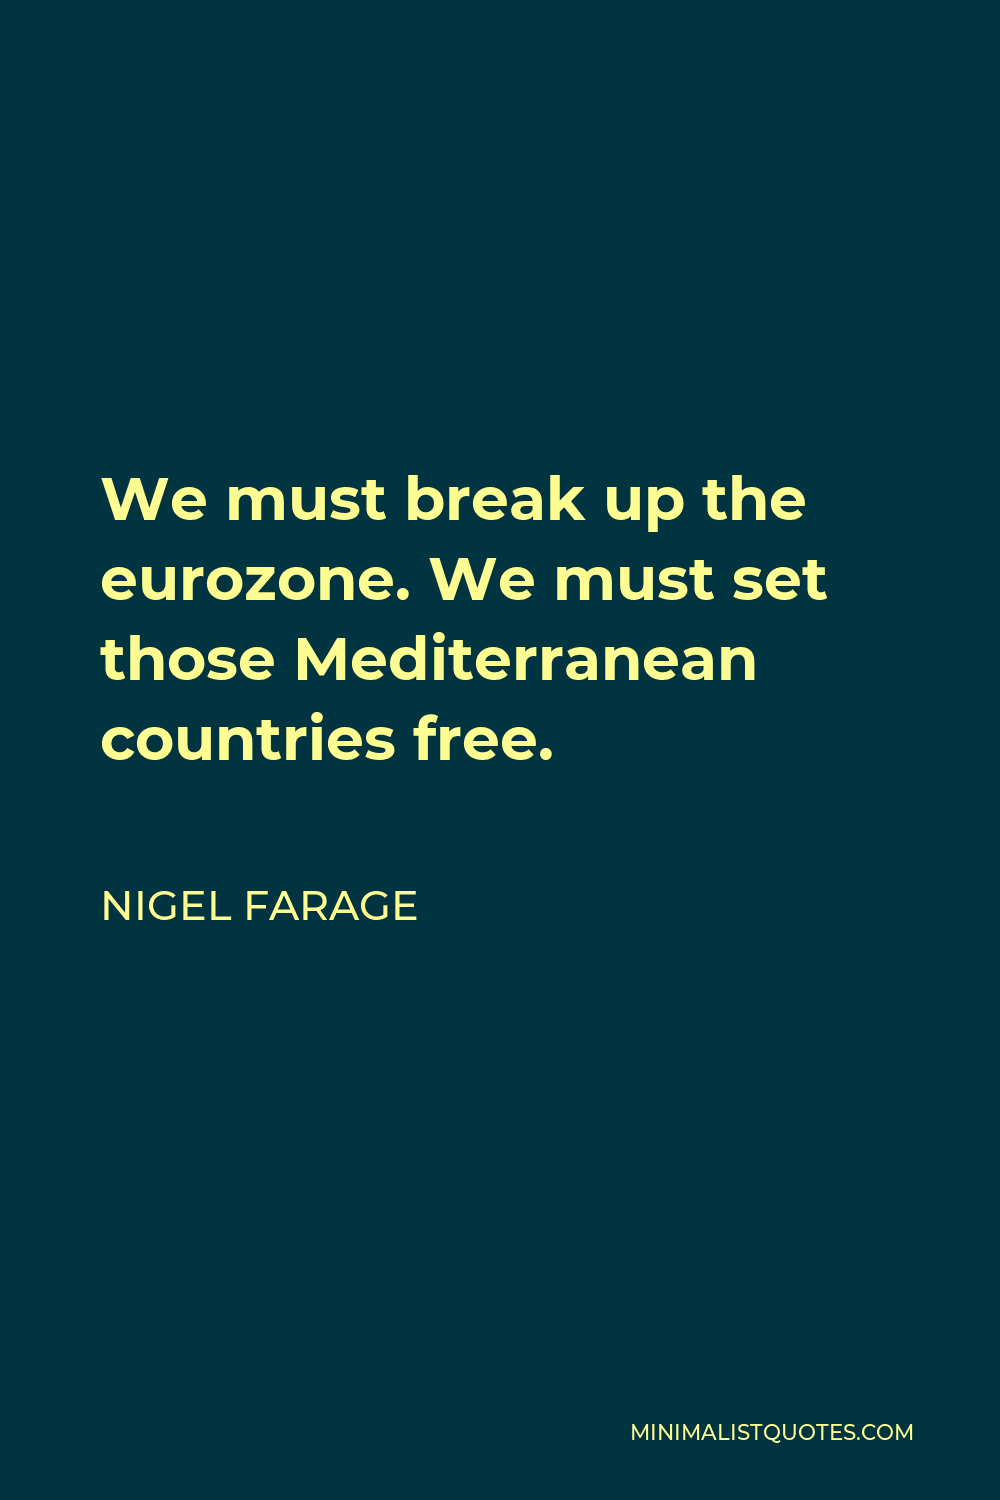 Nigel Farage Quote - We must break up the eurozone. We must set those Mediterranean countries free.